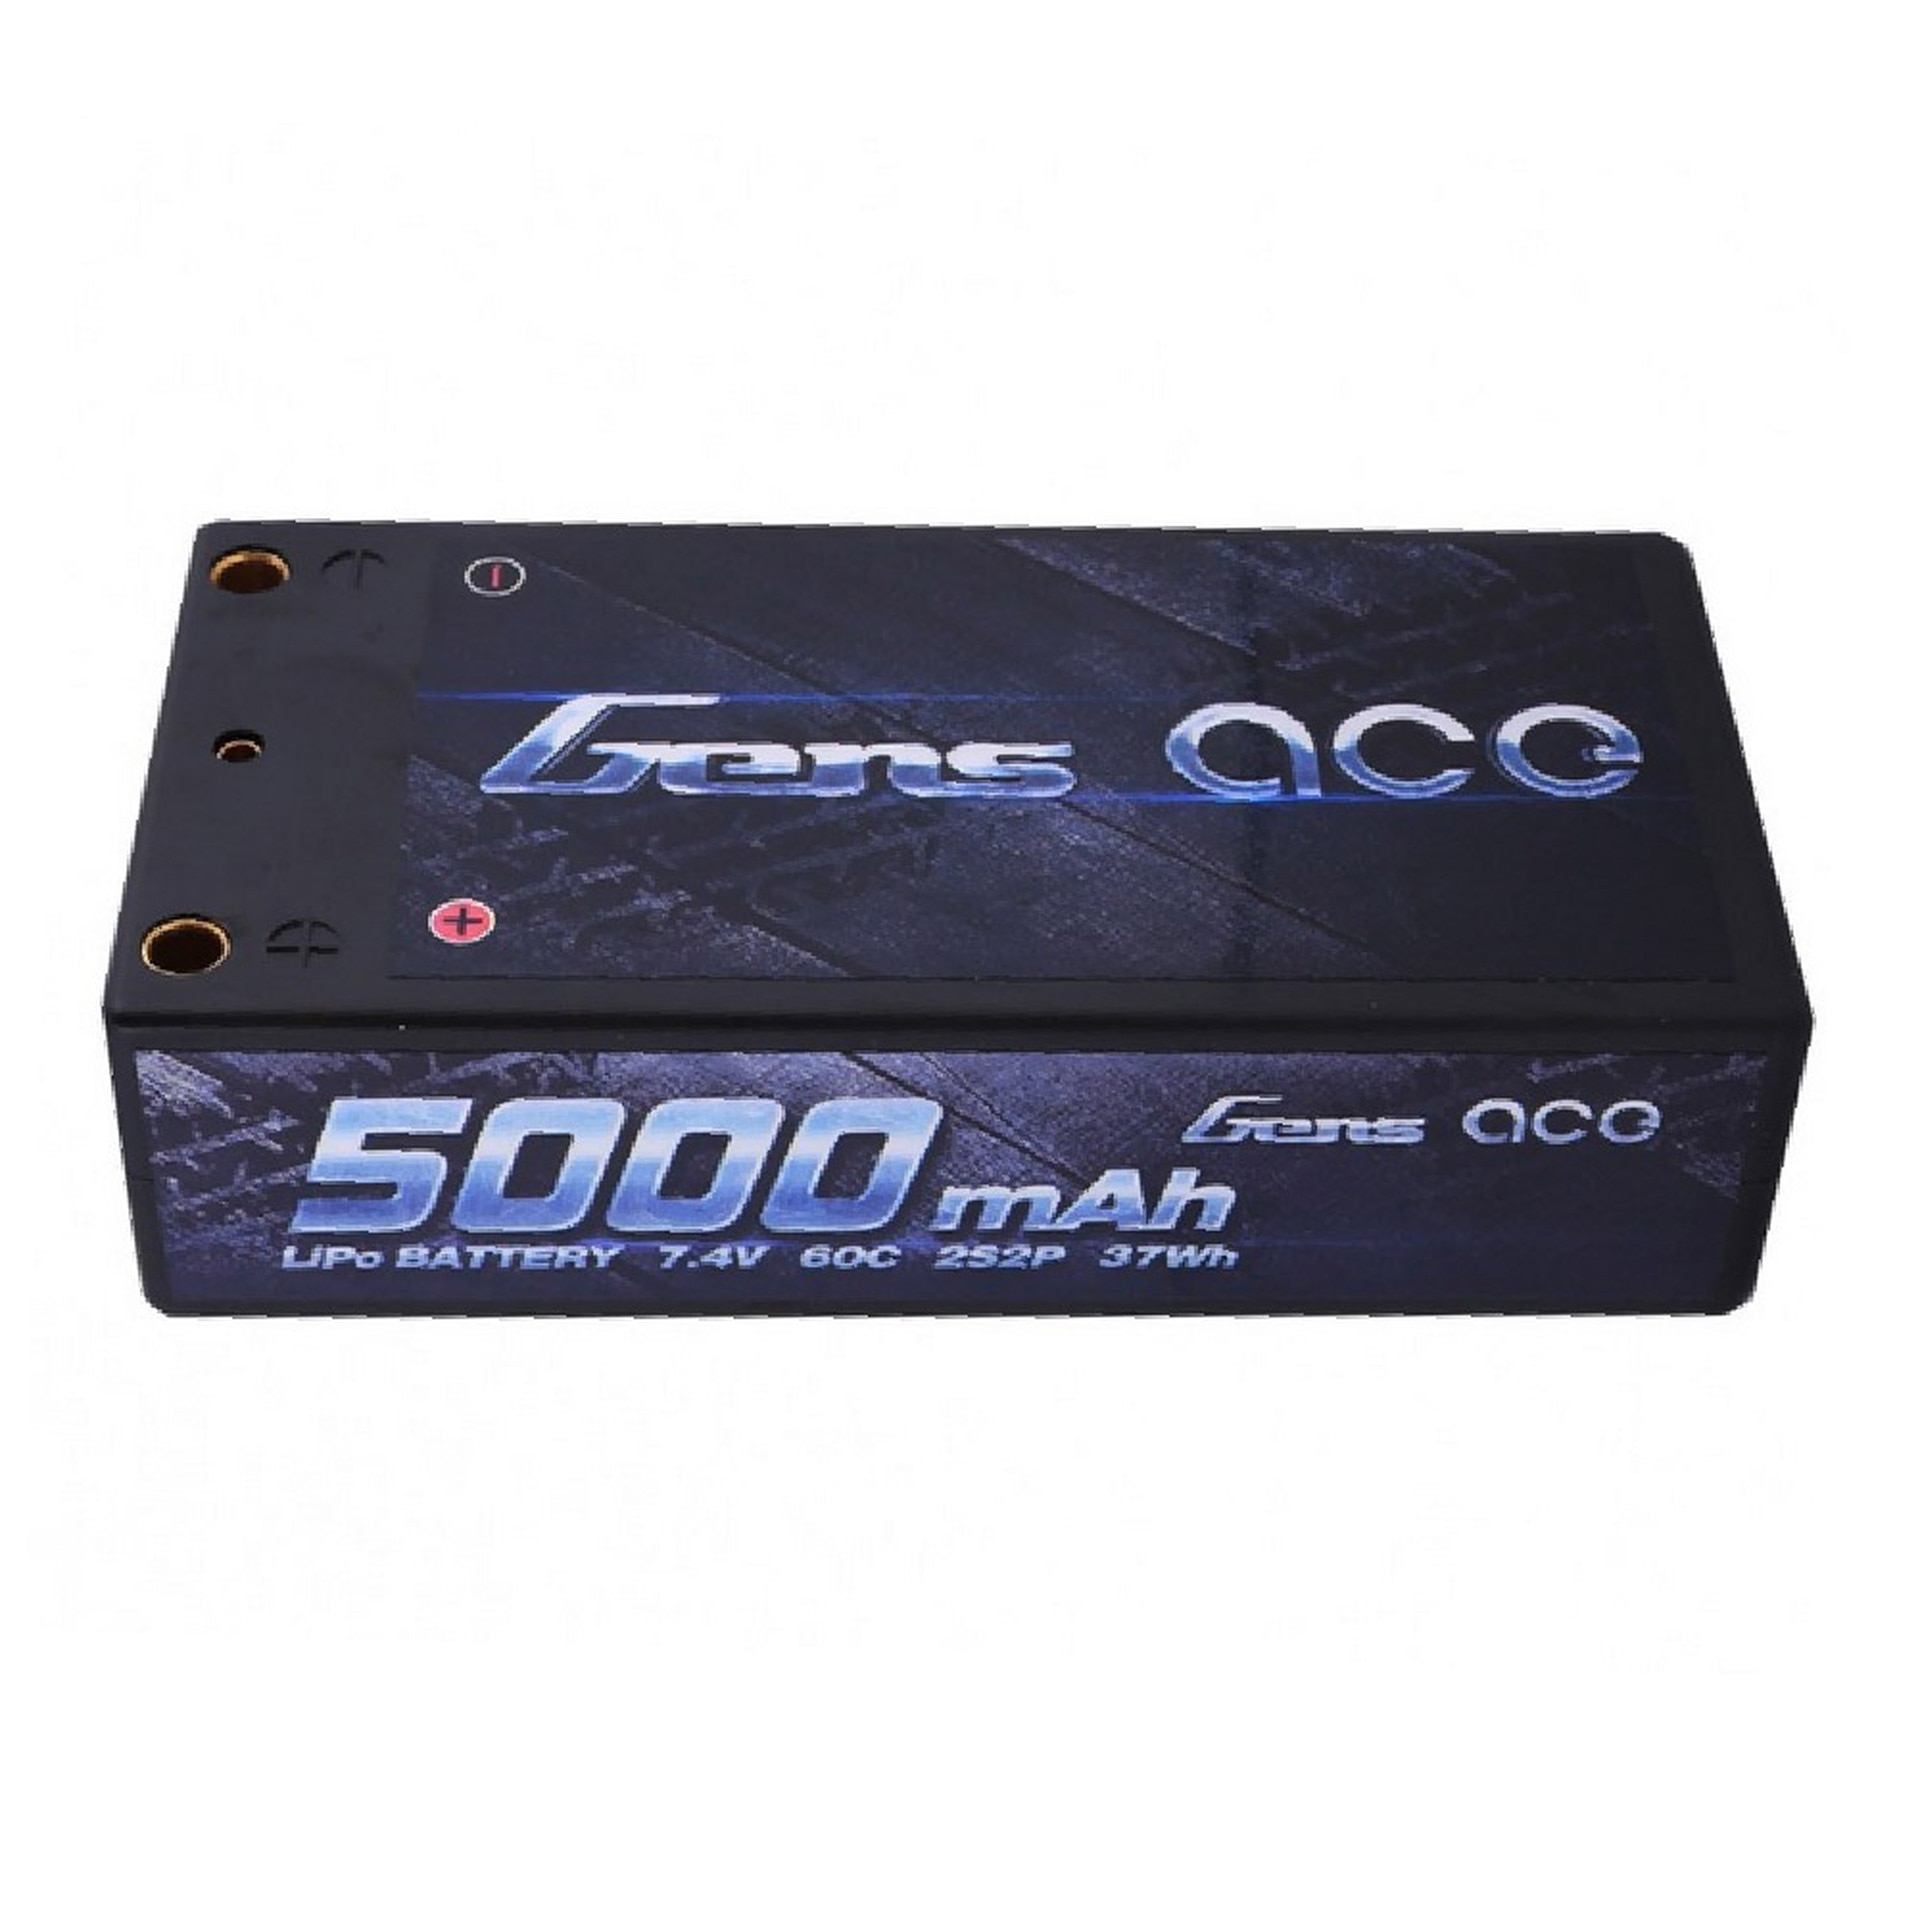 Redcat Racing GA-500060C Gens Ace Battery in NIMH - image 1 of 3